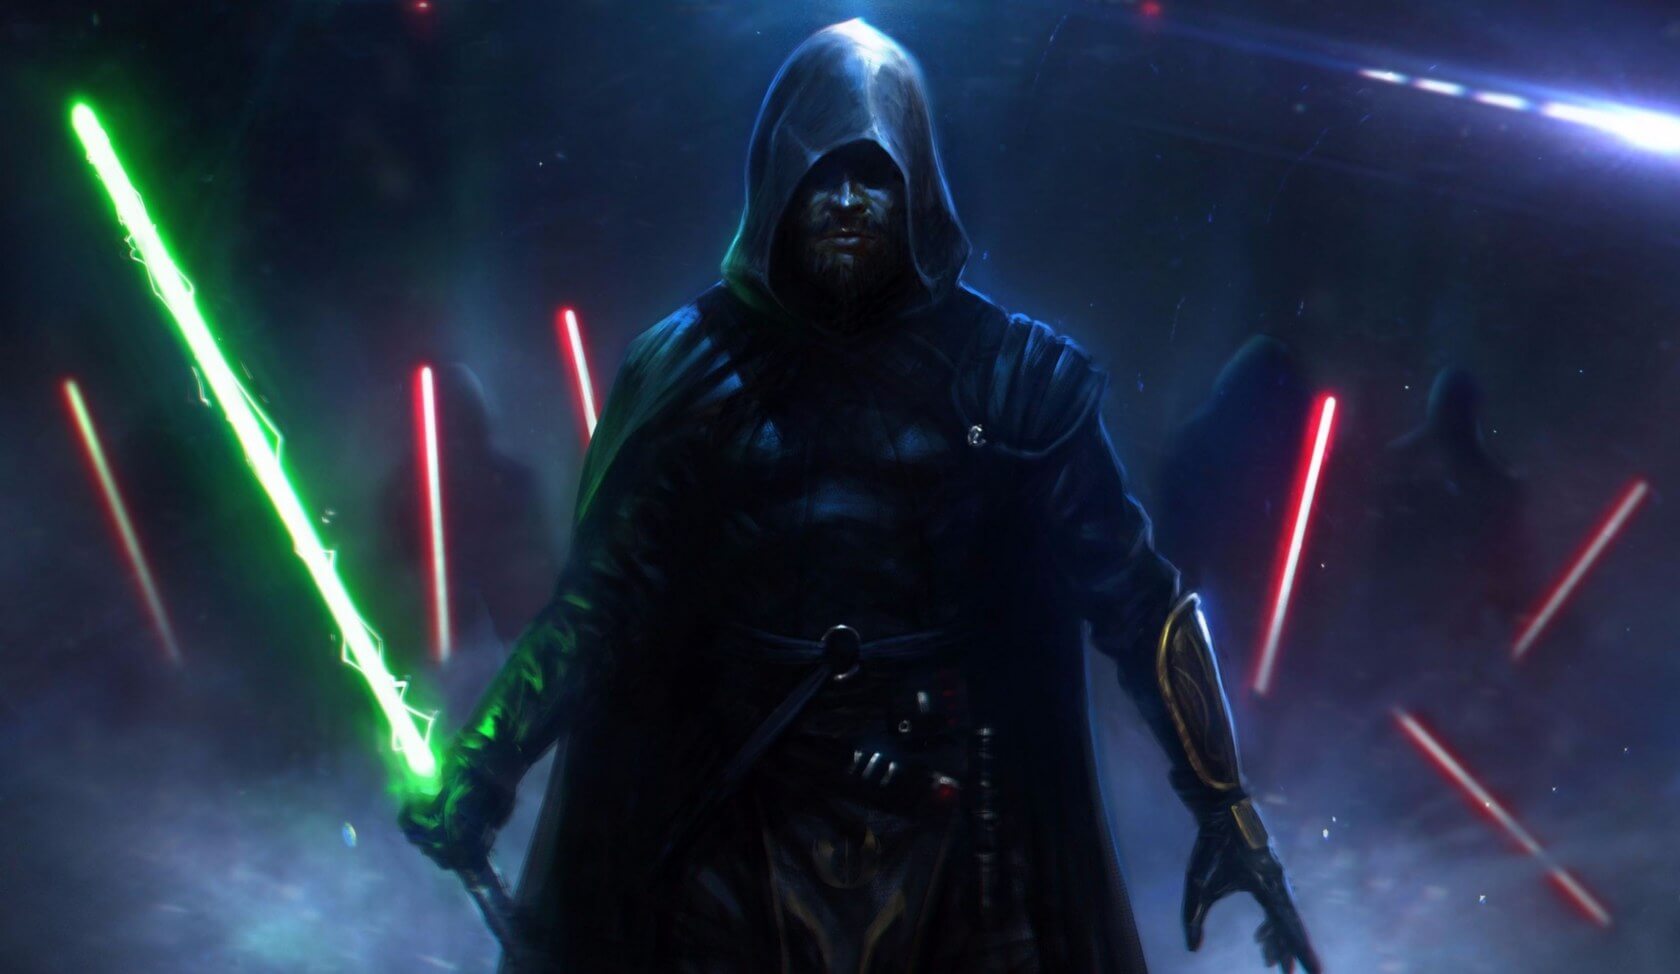 Respawn announces Star Wars: Jedi Fallen Order during EA's E3 showcase